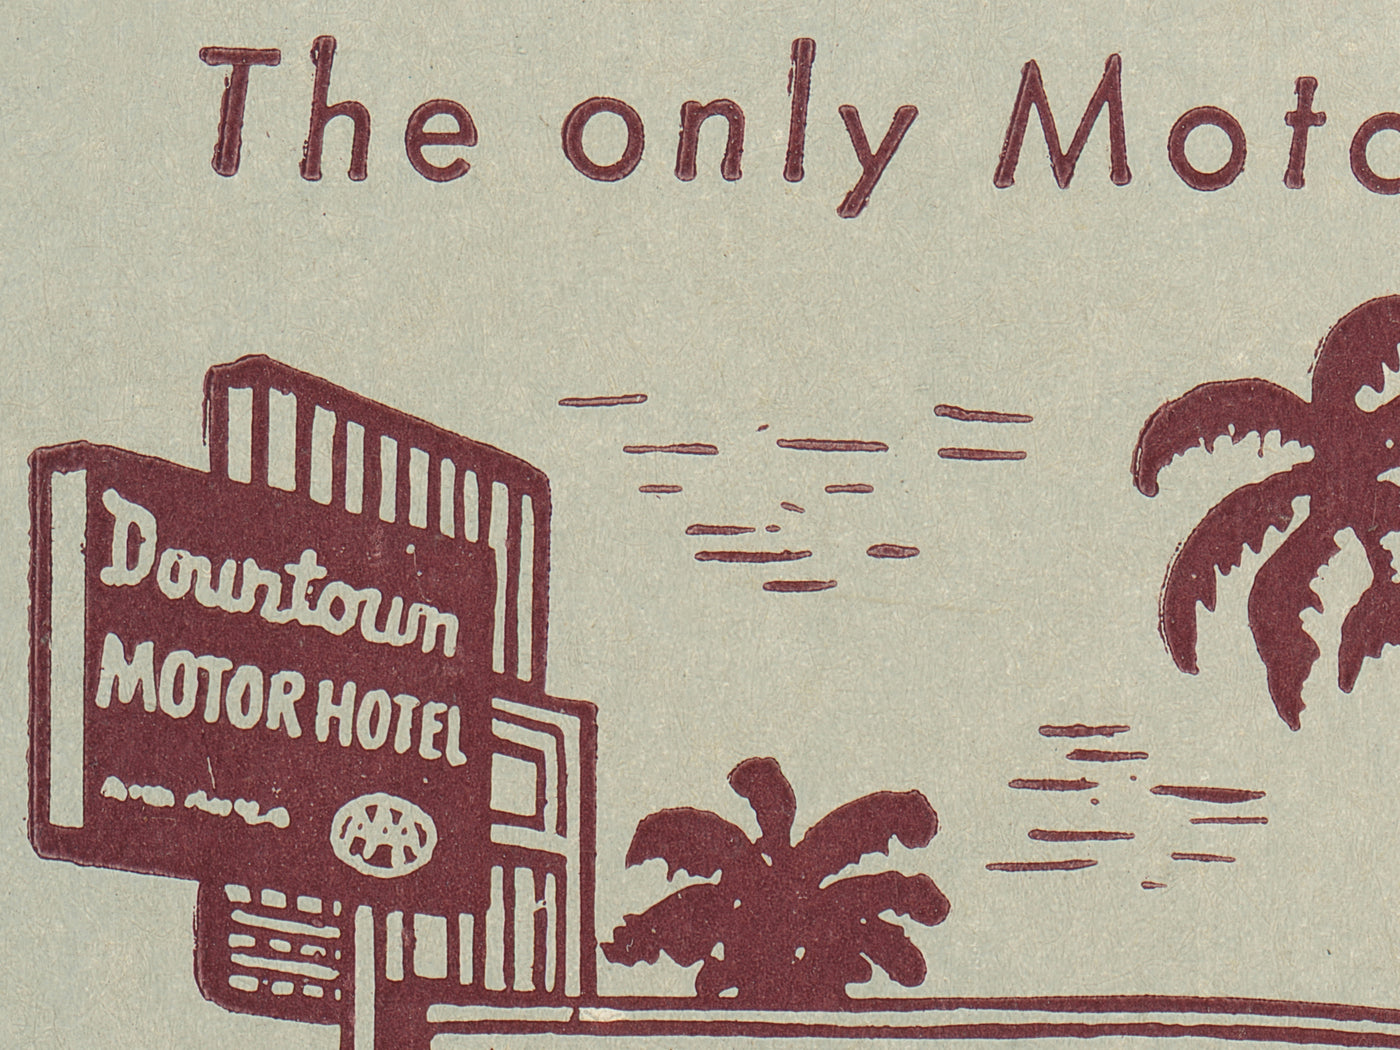 Downtown Motor Hotel Matchbook Print